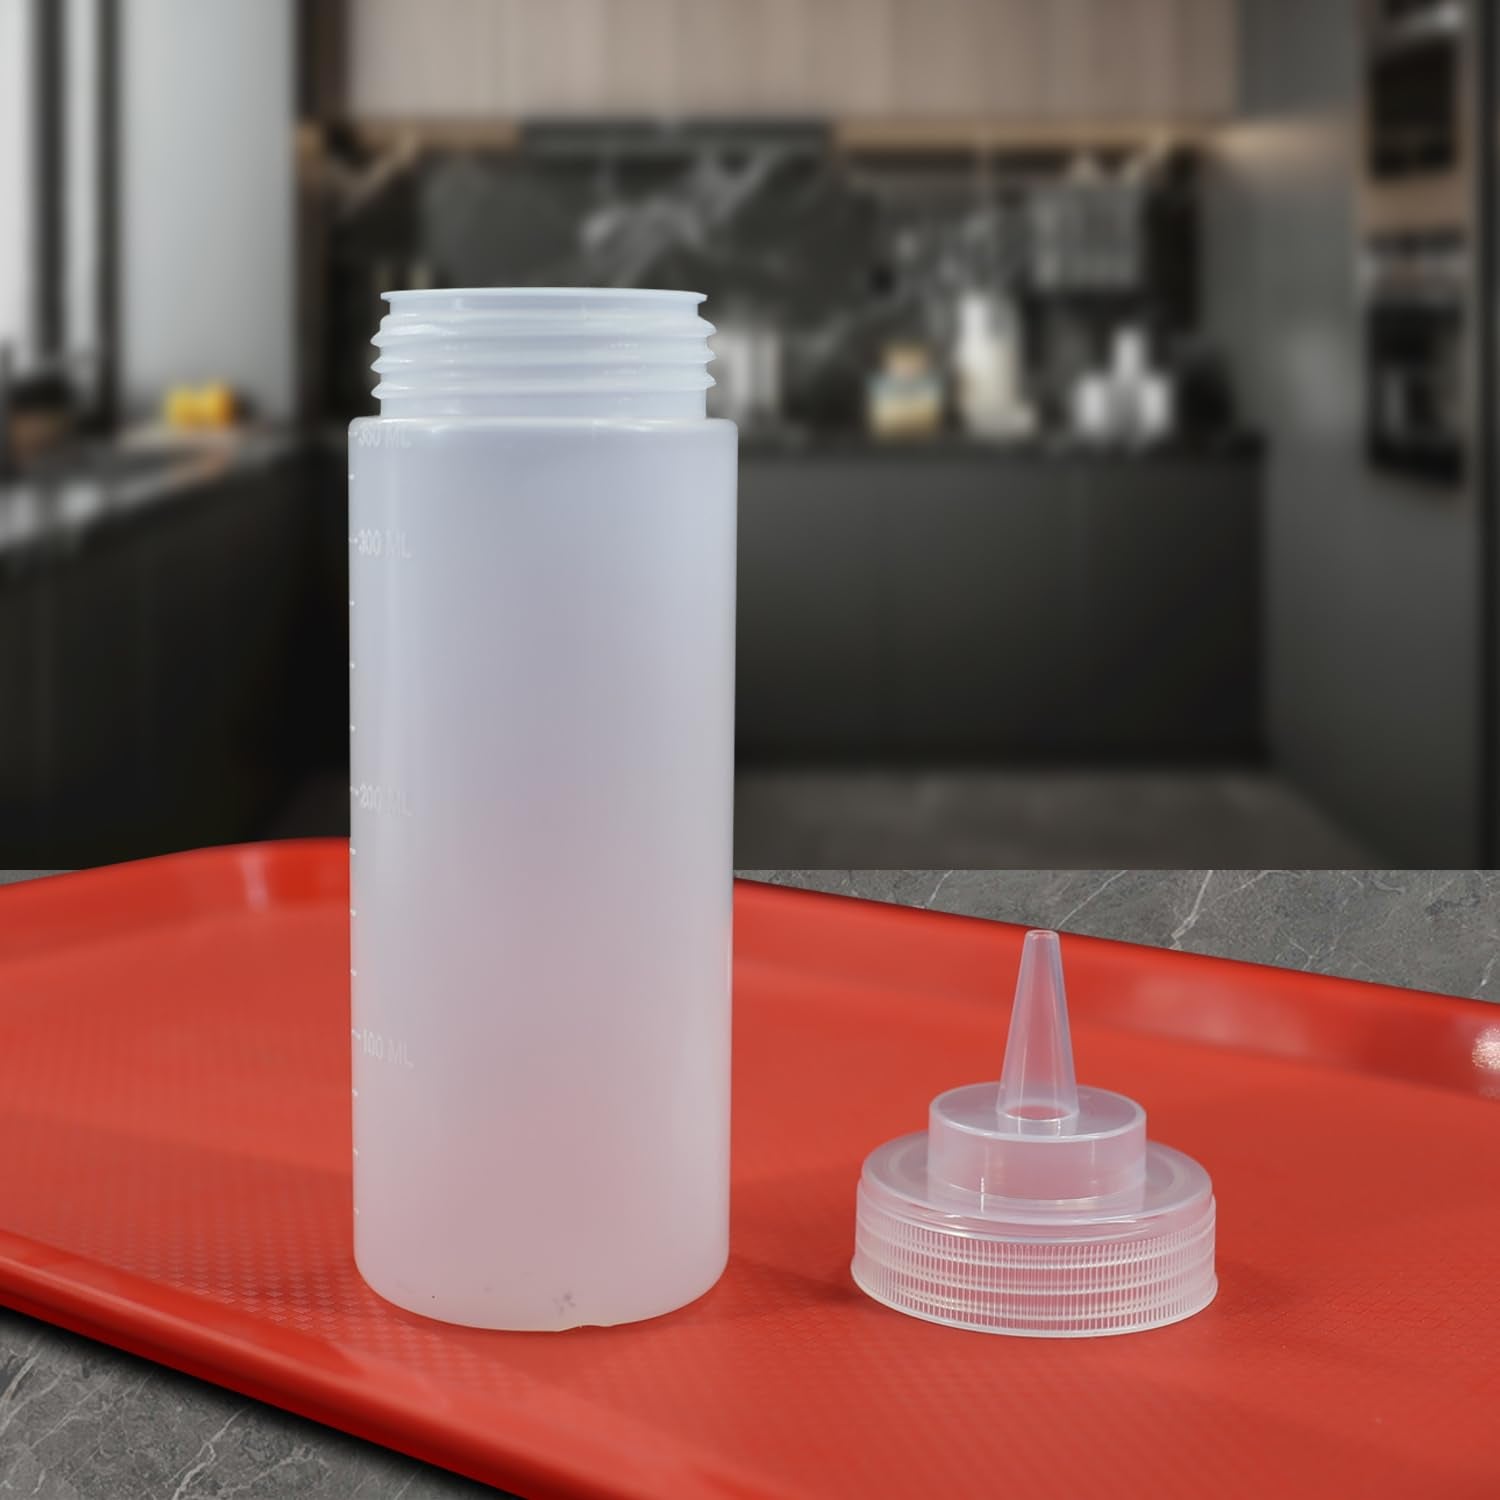 EasyRose Plastic Condiment Squeeze Bottles,Sauce bottle,Squeeze Bottle Dispenser,Refillable With Tip Cap,Set of 6 (8 oz)